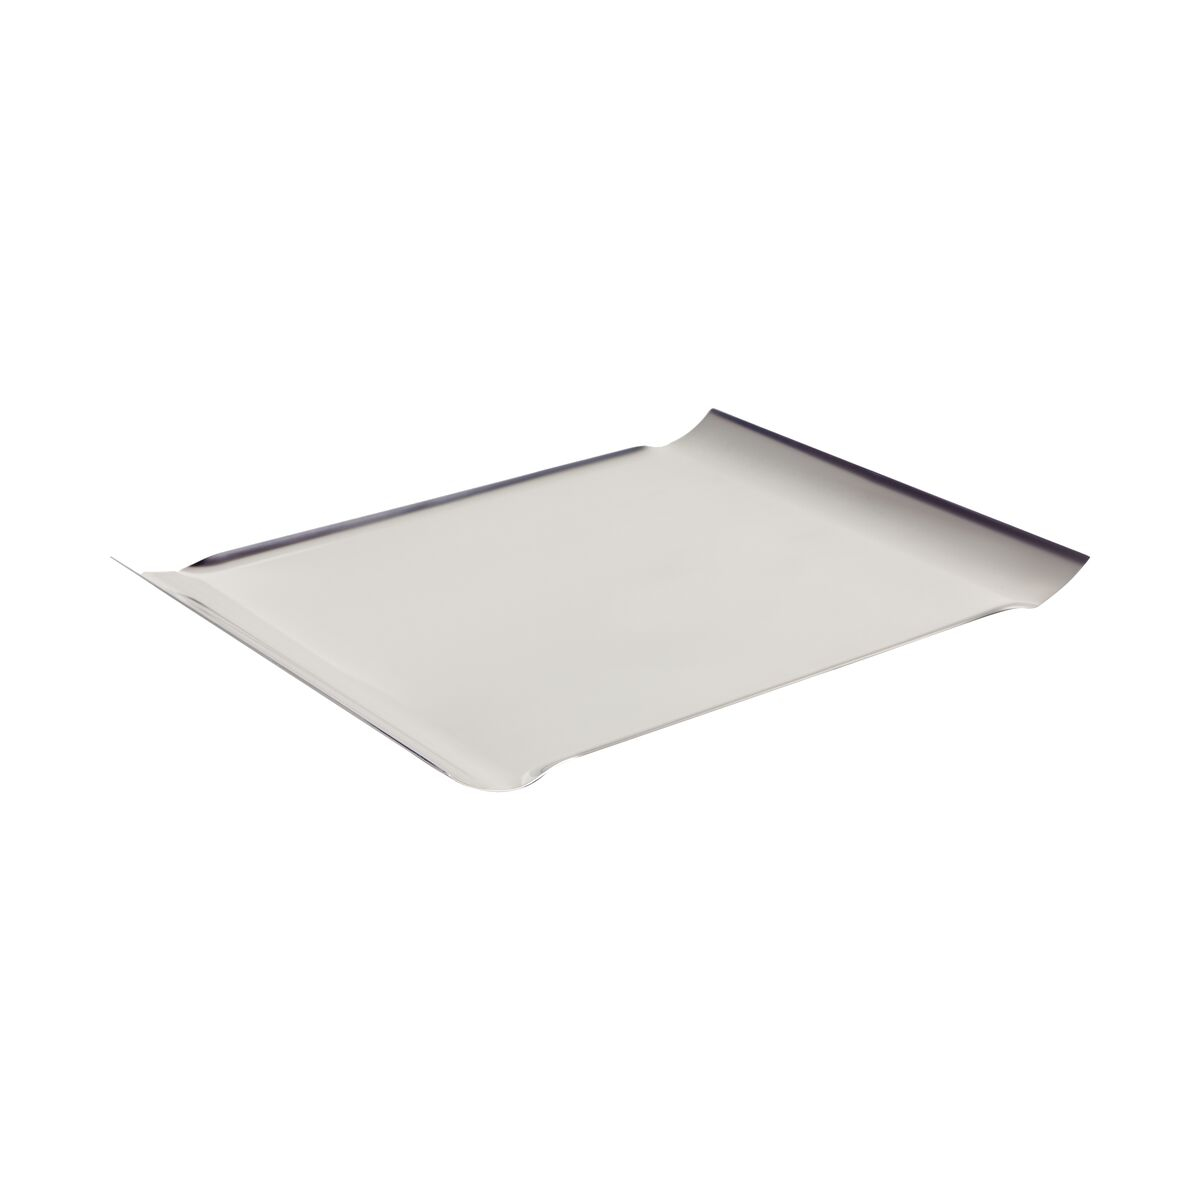 Tramontina Piani rectangular stainless steel tray with shiny finish 57 x 32 cm